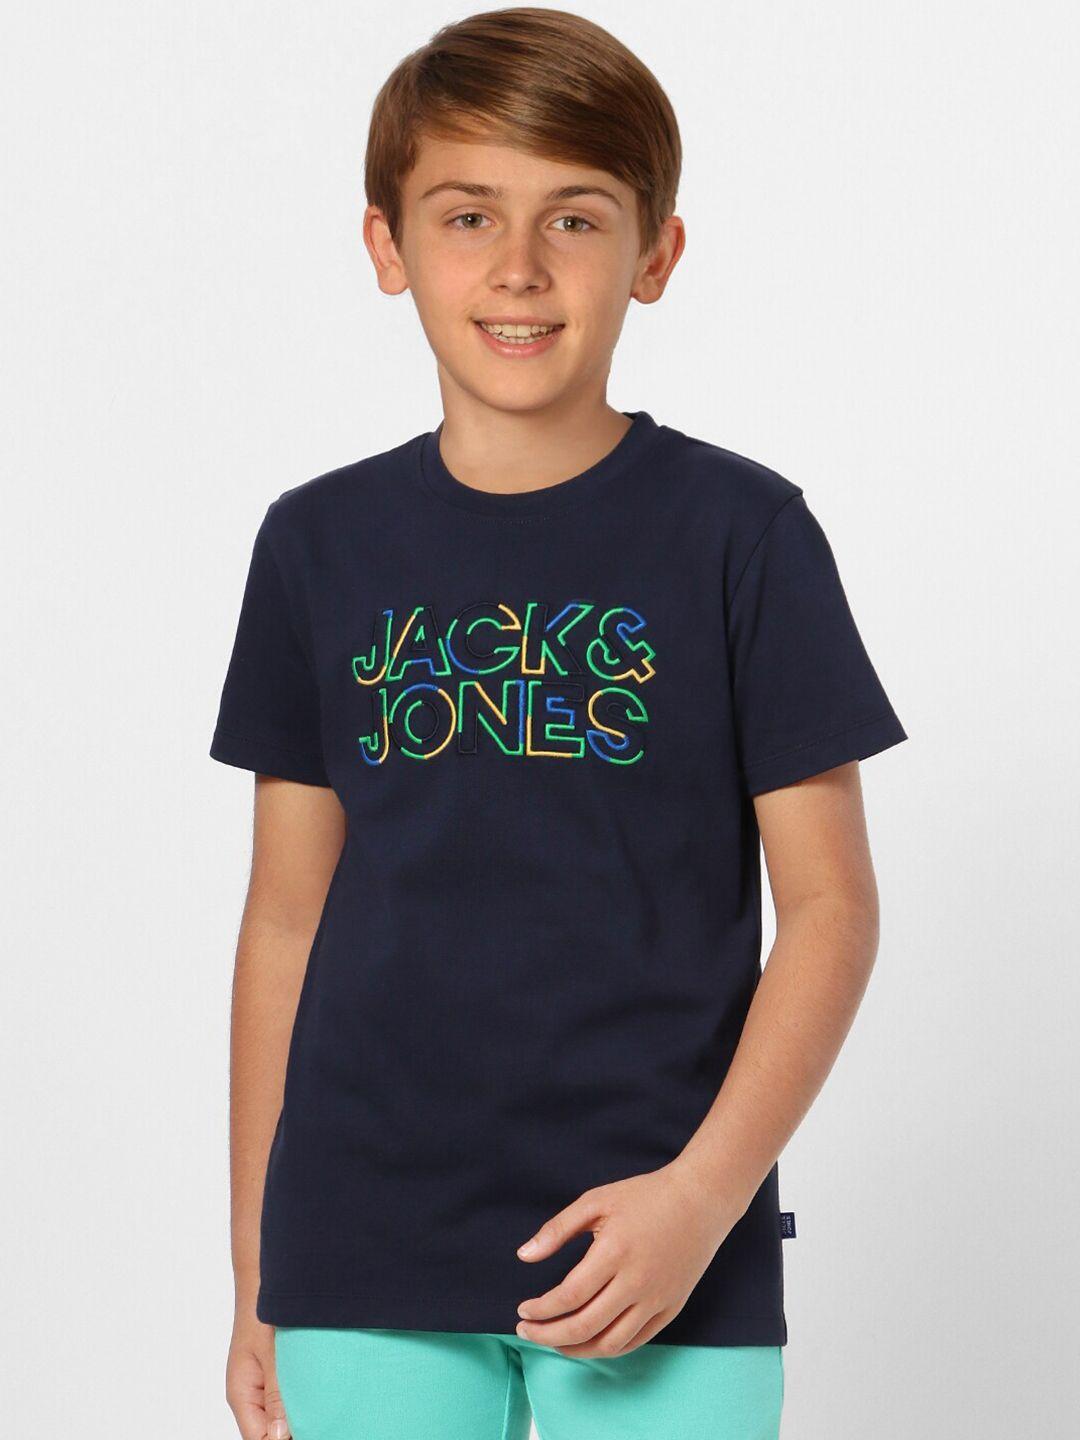 jack-&-jones-boys-navy-blue-typography-printed-cotton-t-shirt